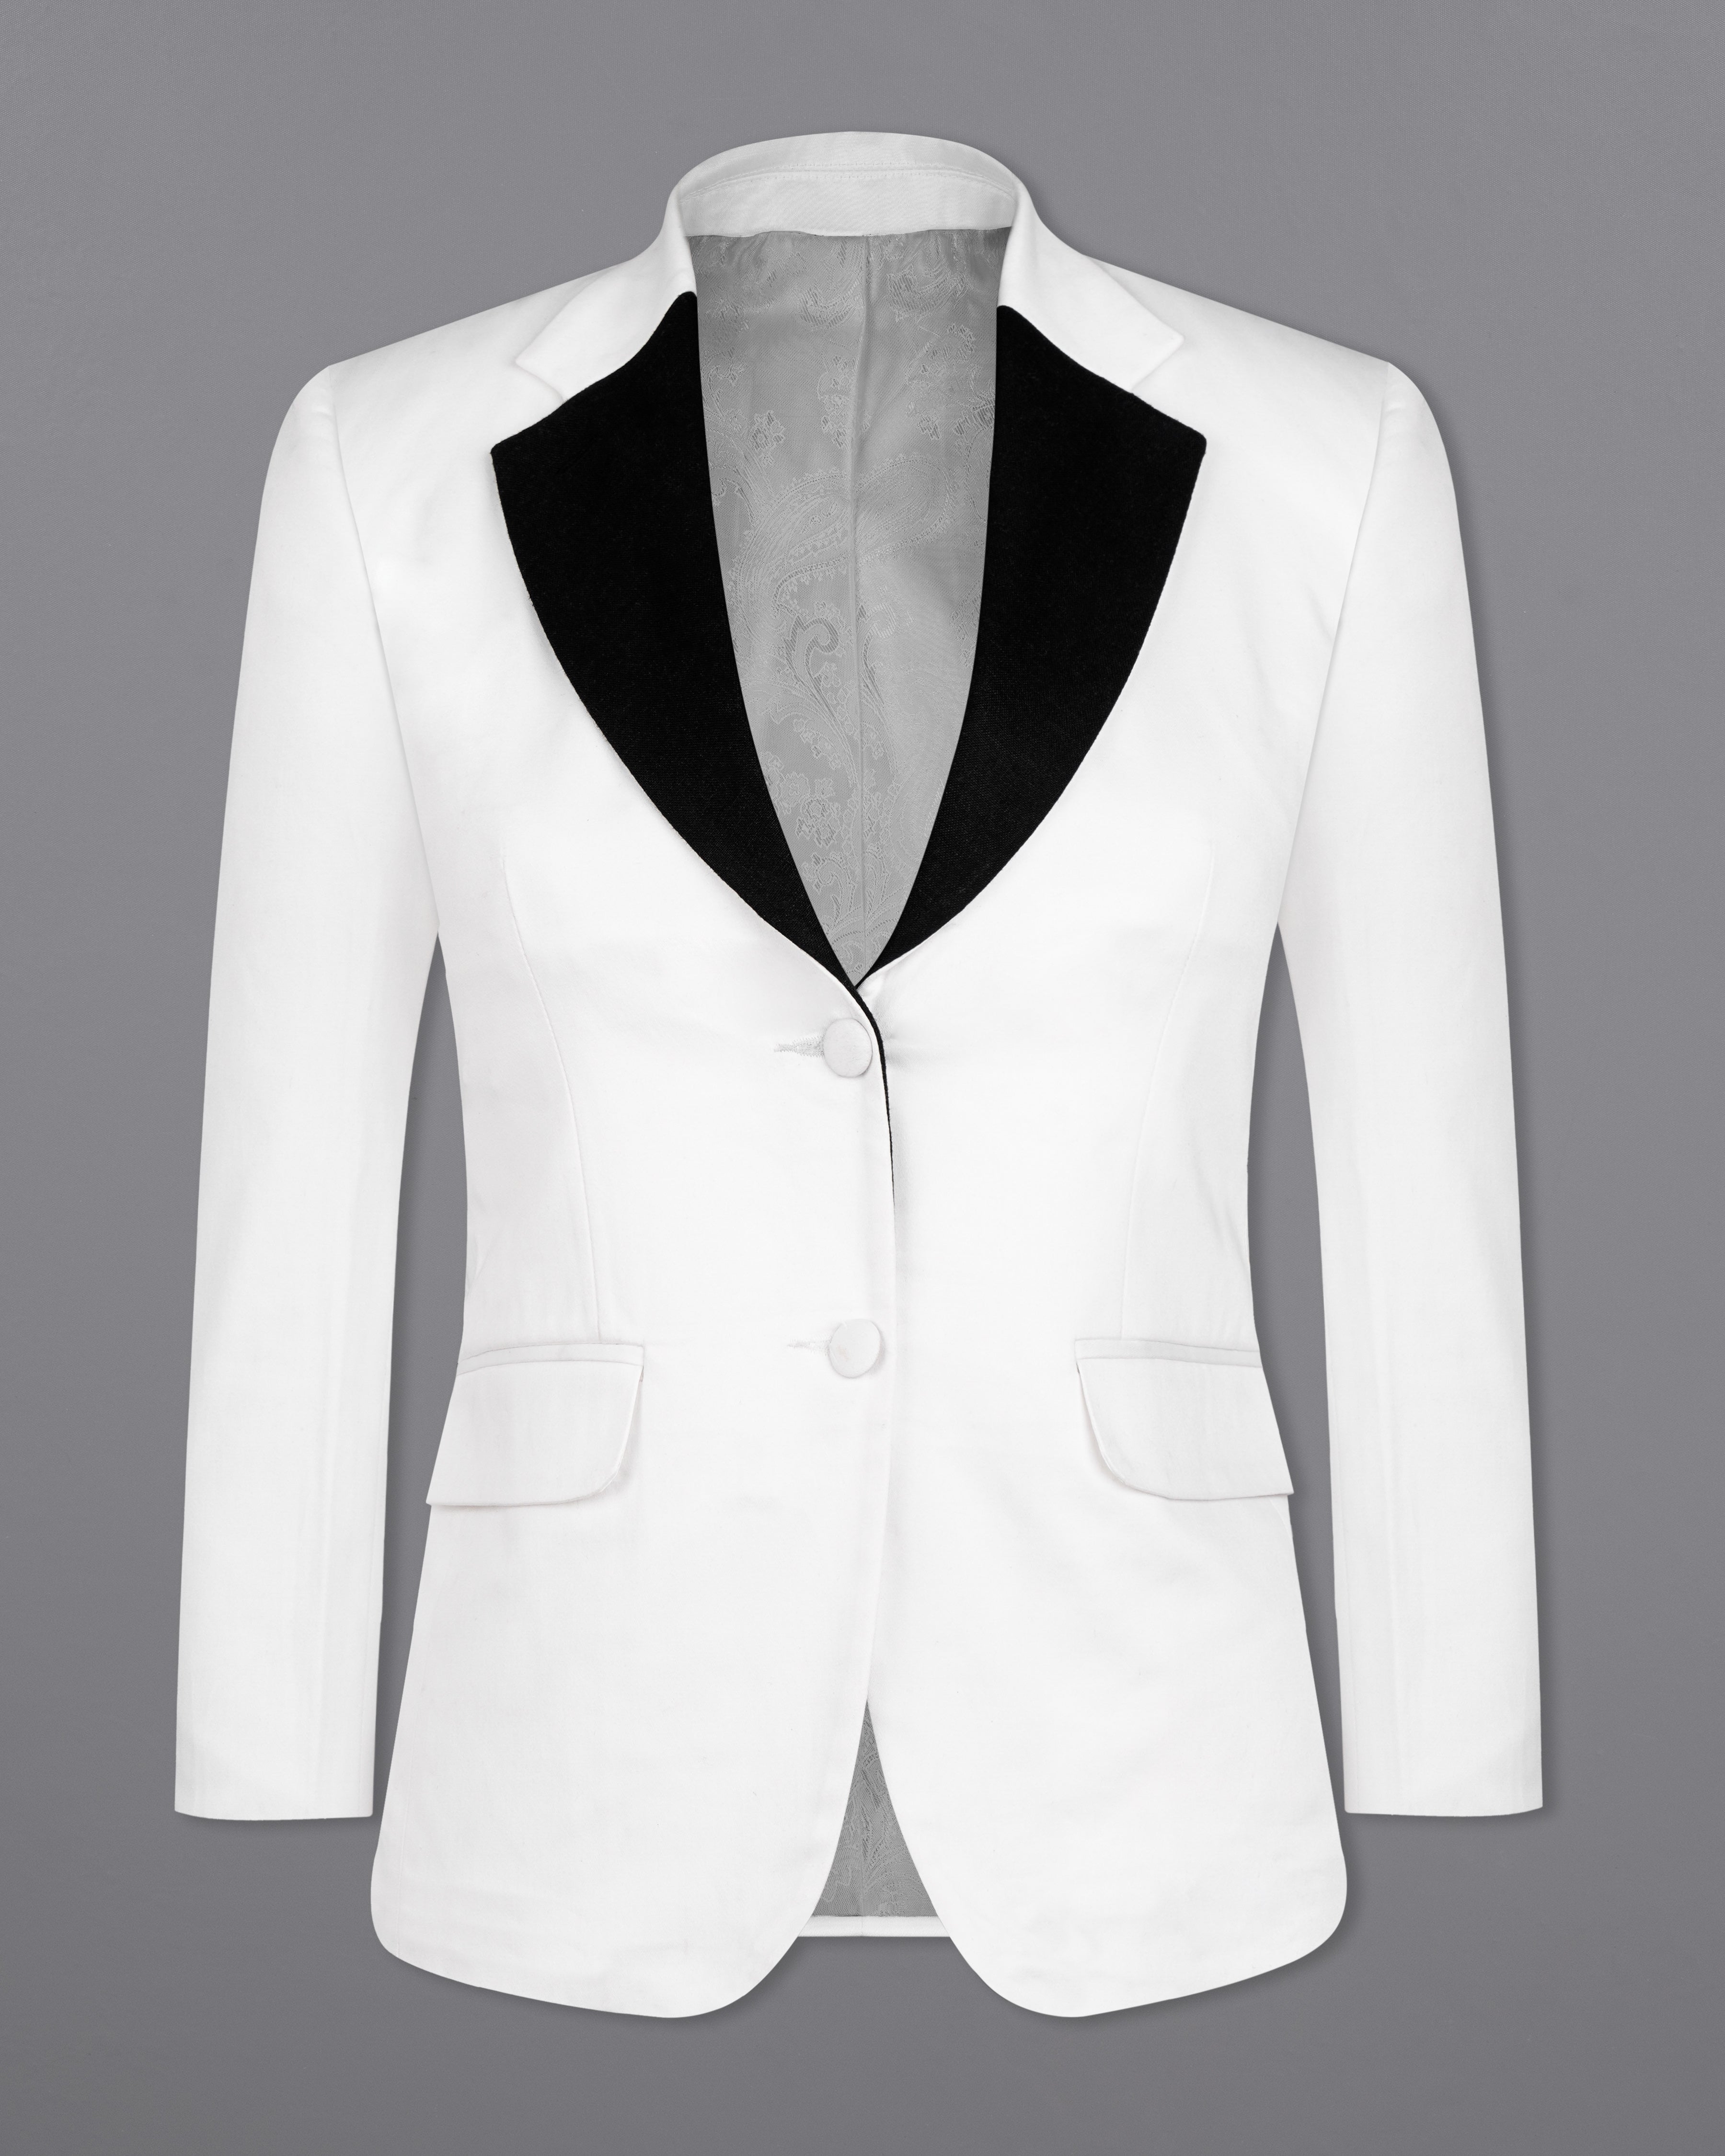 Bright White with Black Patch Collar Premium Cotton Women's Suit WST005-SB-BKPL-FB-32, WST005-SB-BKPL-FB-34, WST005-SB-BKPL-FB-36, WST005-SB-BKPL-FB-38, WST005-SB-BKPL-FB-40, WST005-SB-BKPL-FB-42